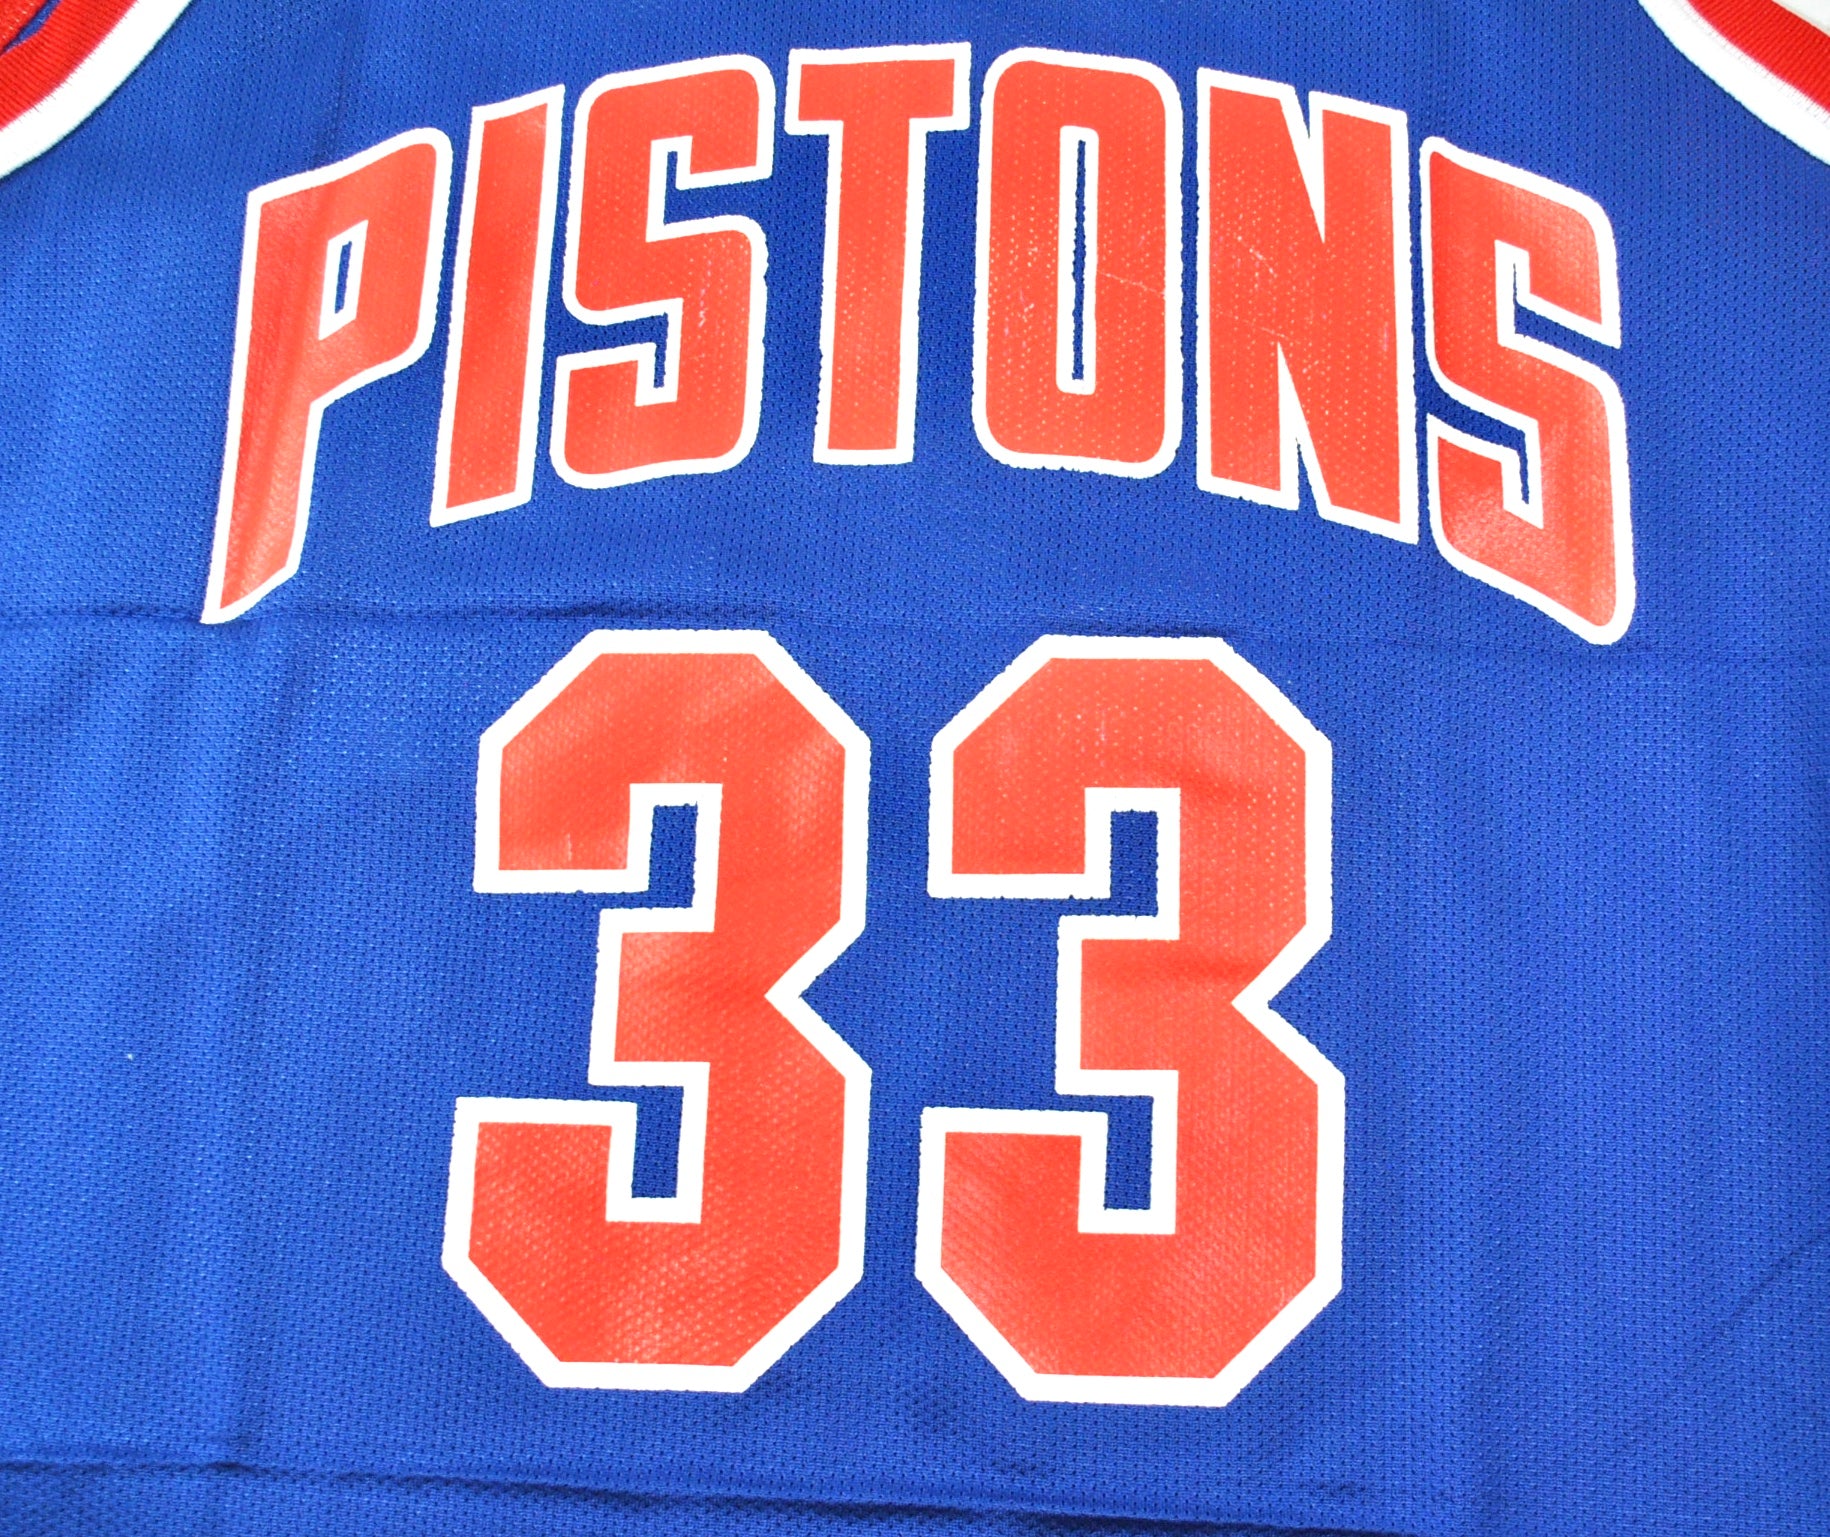 Champion Detroit Pistons Grant Hill 1996/97 NBA 50th Gold jersey #33 @50 40  M